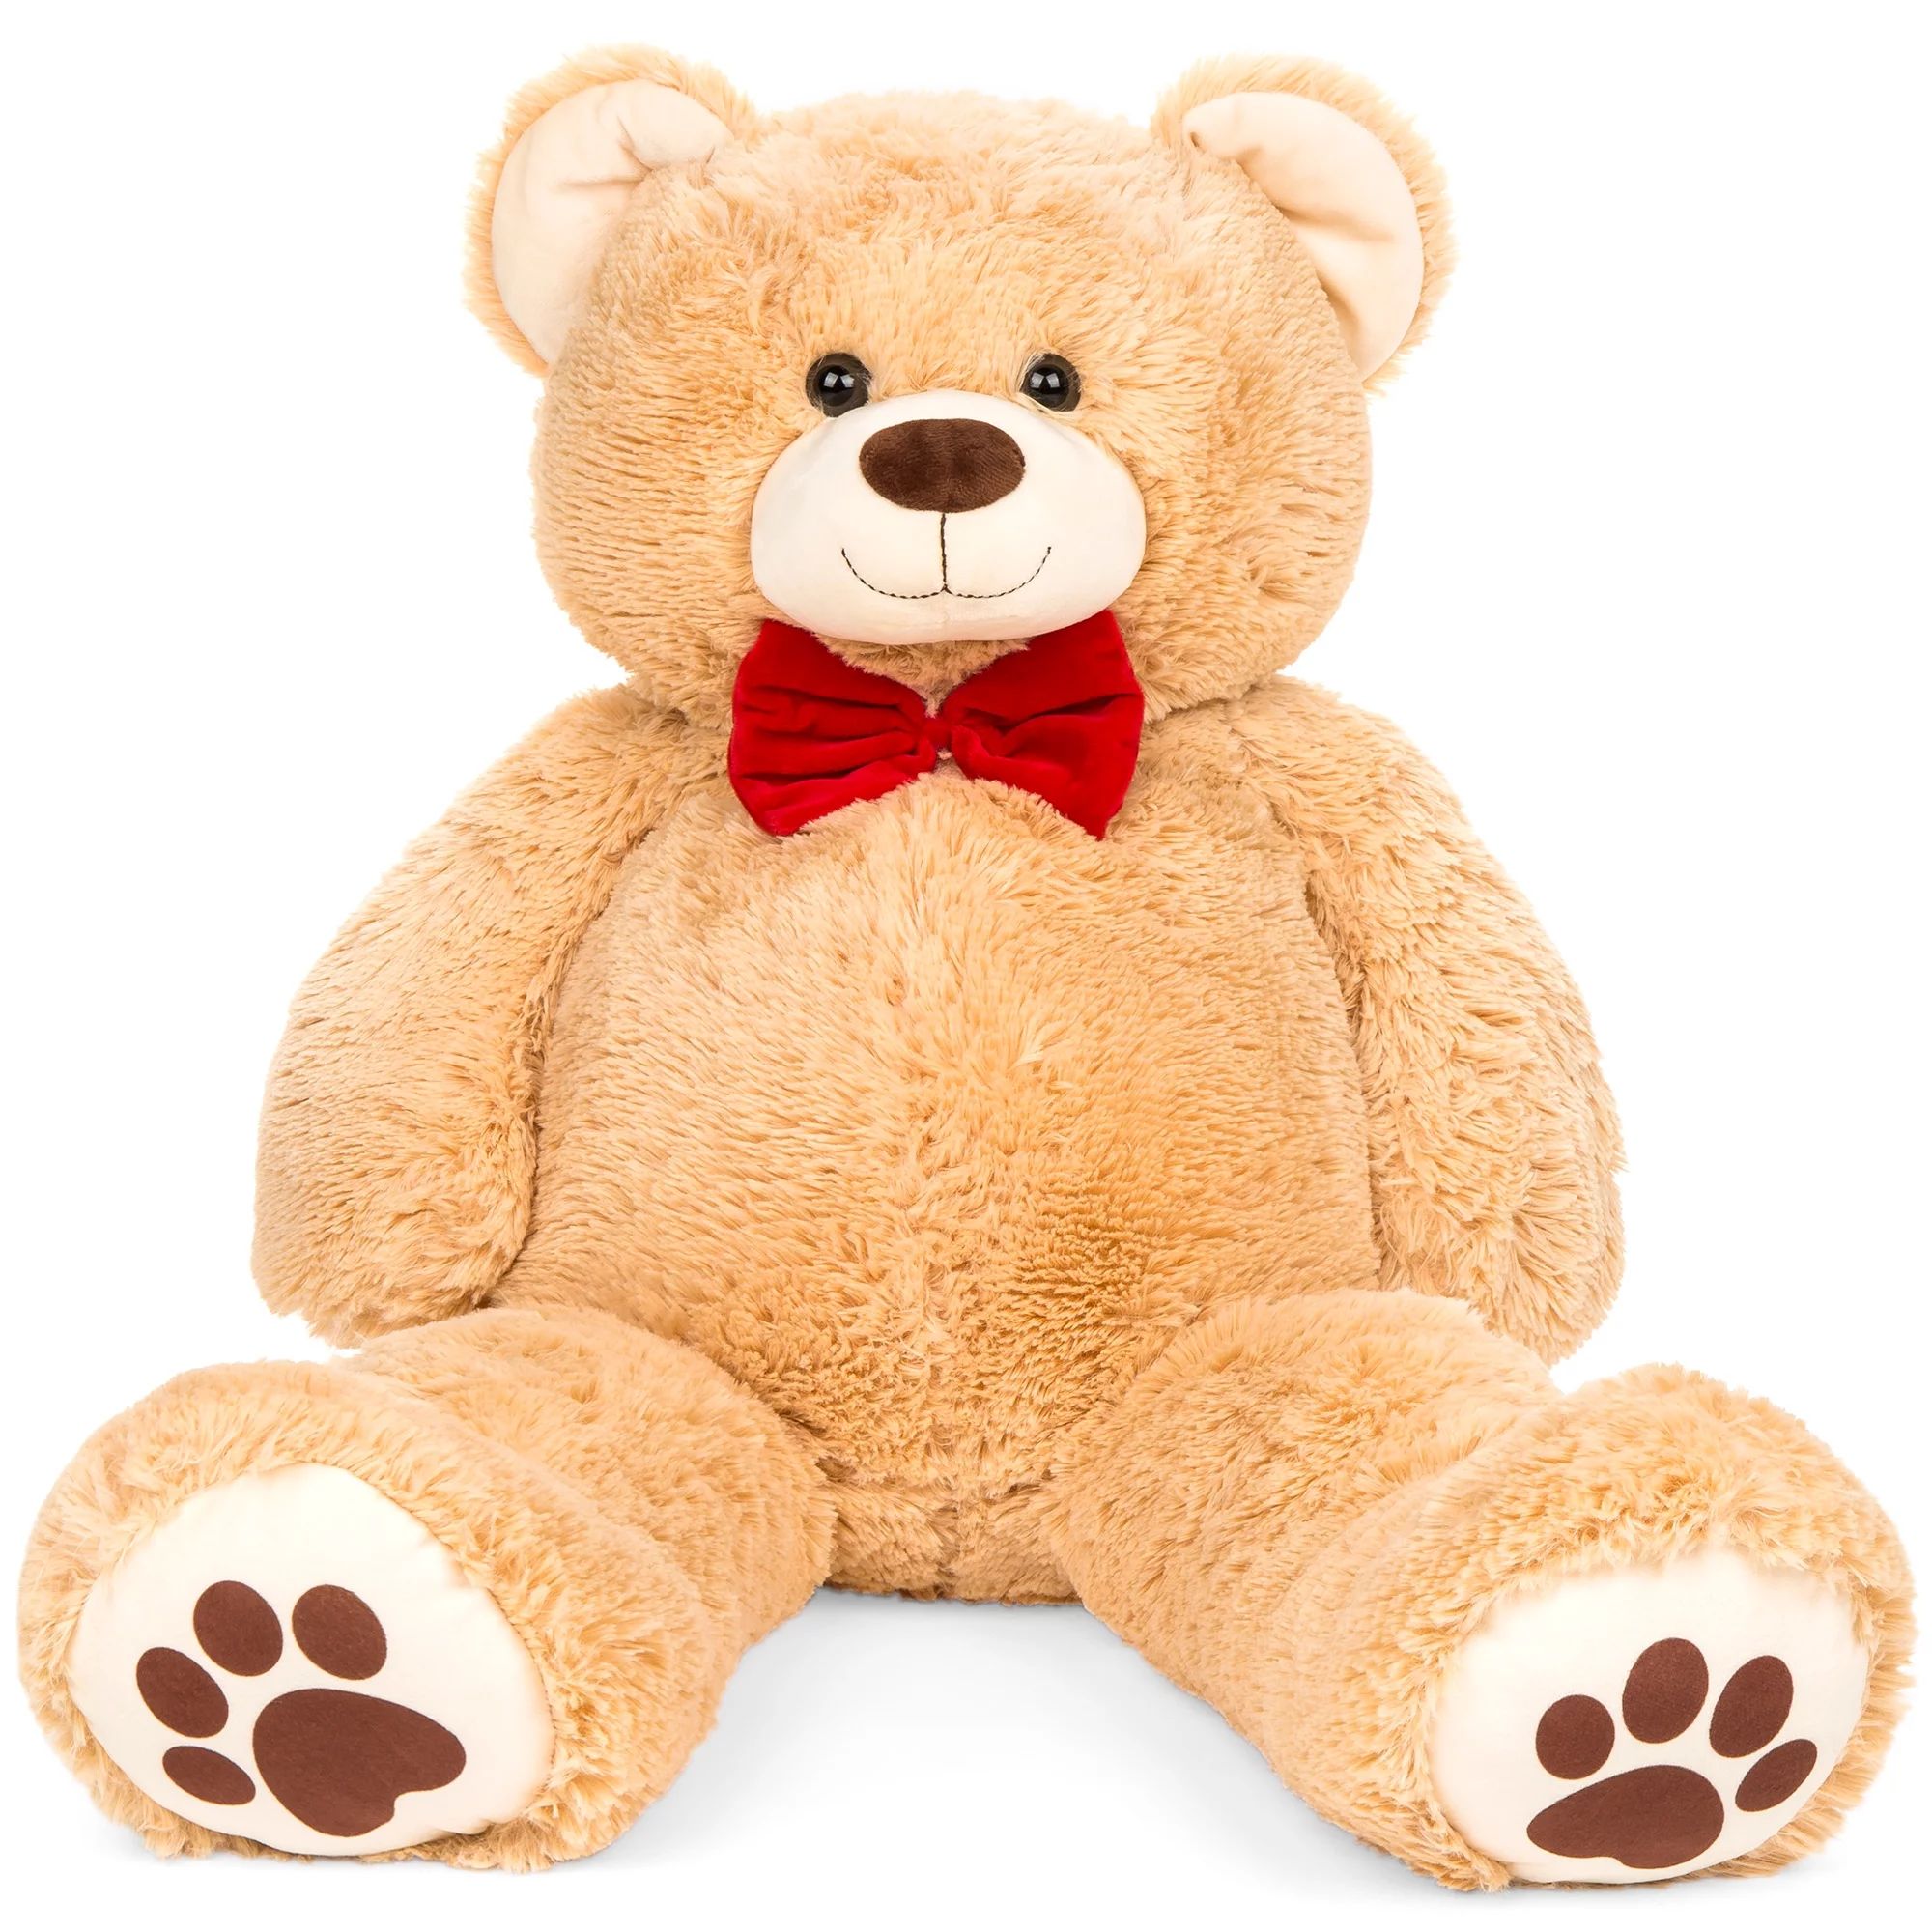 Best Choice Products 38in Giant Soft Plush Teddy Bear Stuffed Animal Toy w/ Bow Tie, Footprints -... | Walmart (US)